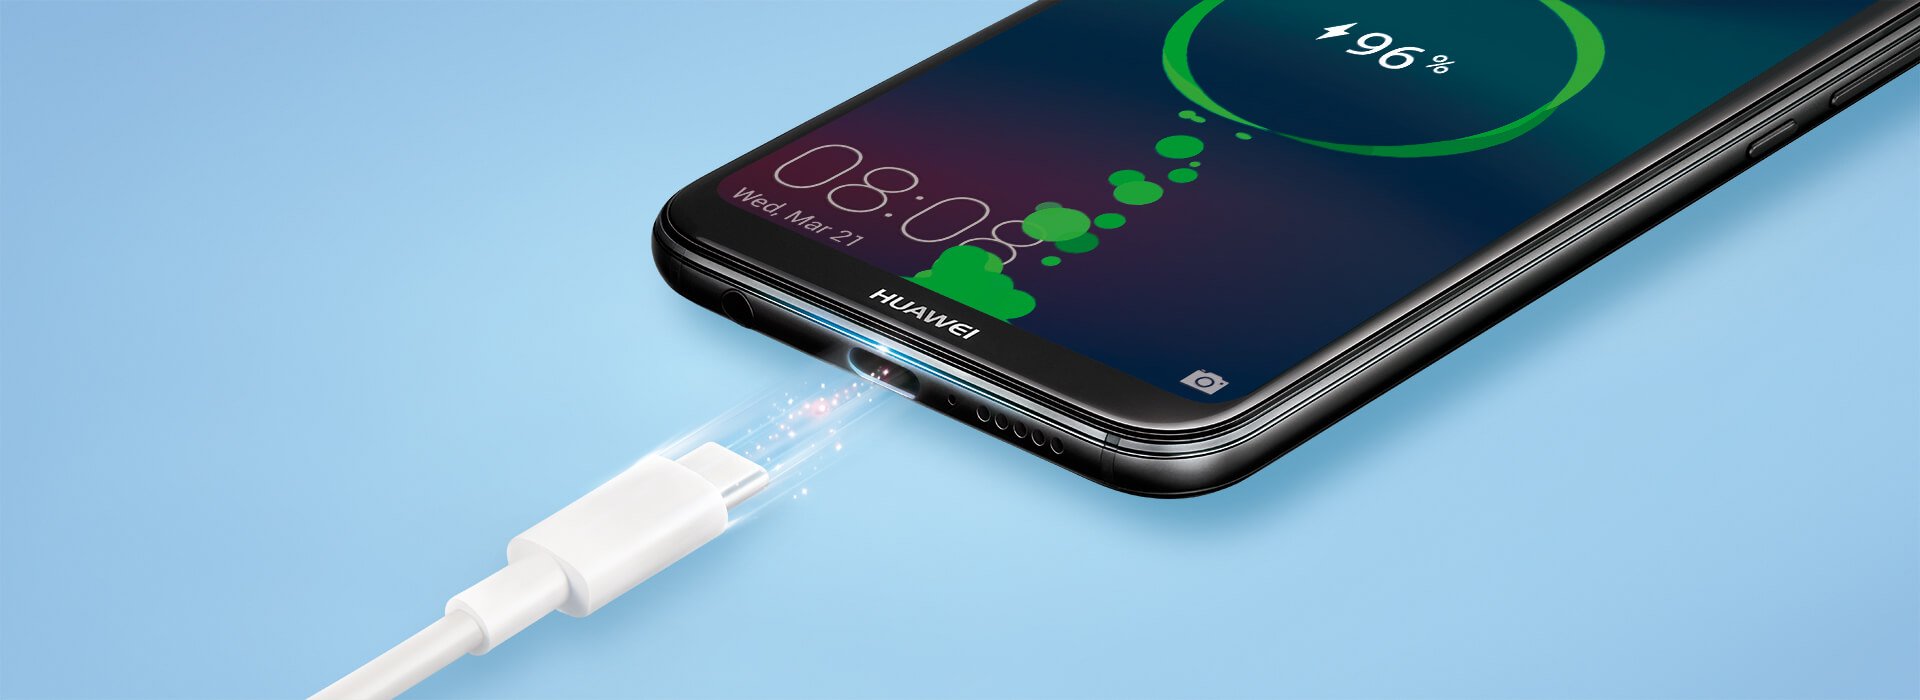 Huawei P20 Lite fast charging